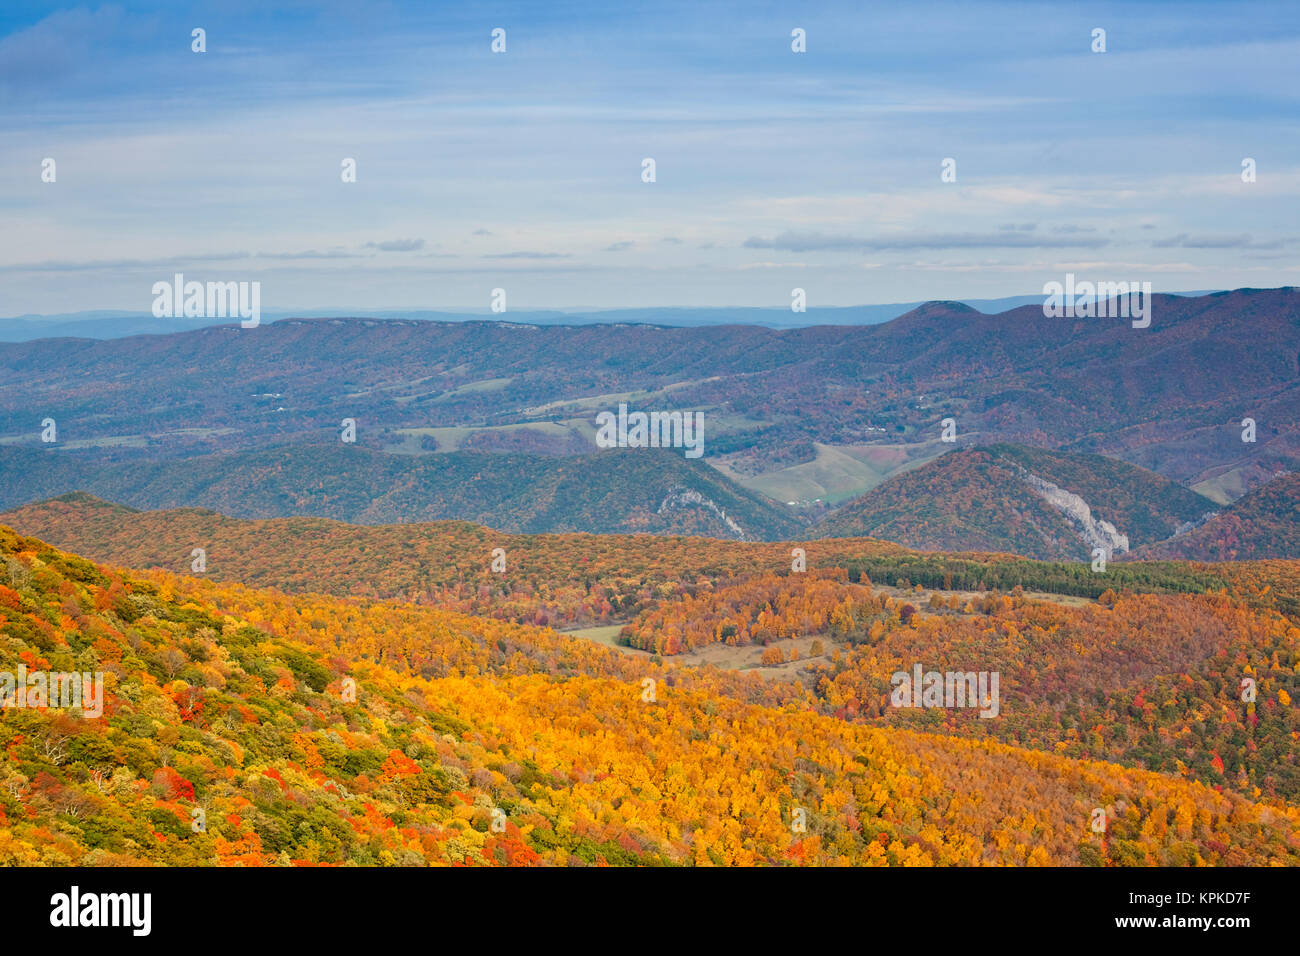 USA, West Virginia, Seneca Rocks. Spruce Knob-Seneca Rocks National Recreation Area, autumn landscape from Spruce Knob, el. 4863 feet, highest point in West Virginia. Stock Photo